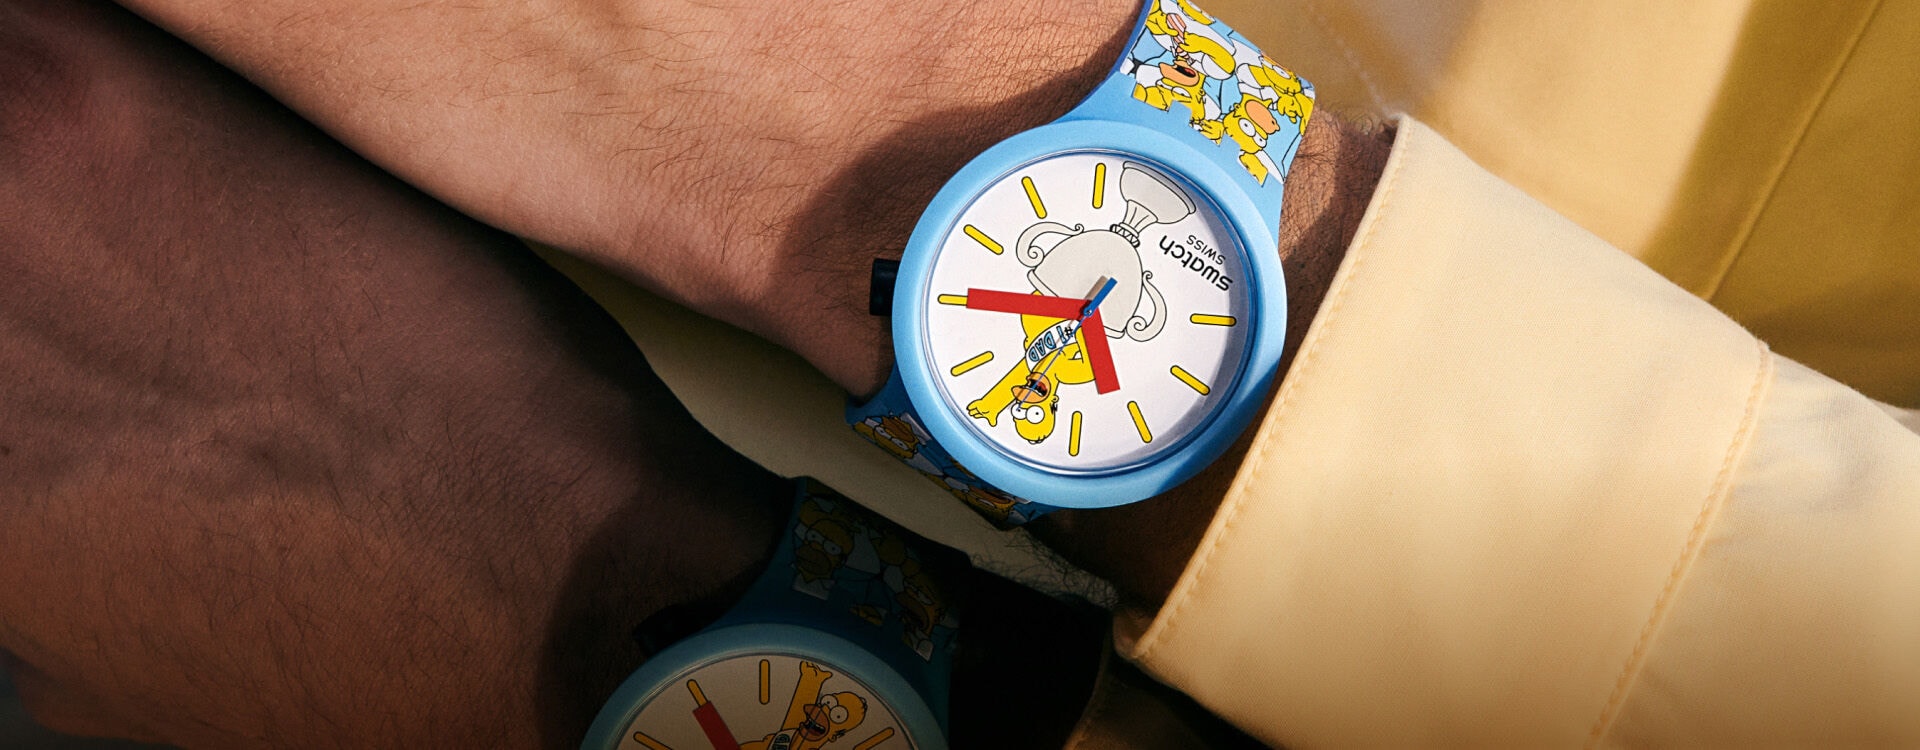 Swatch Reloj de Cuarzo Unisex Chemical Blue 45 mm : : Moda